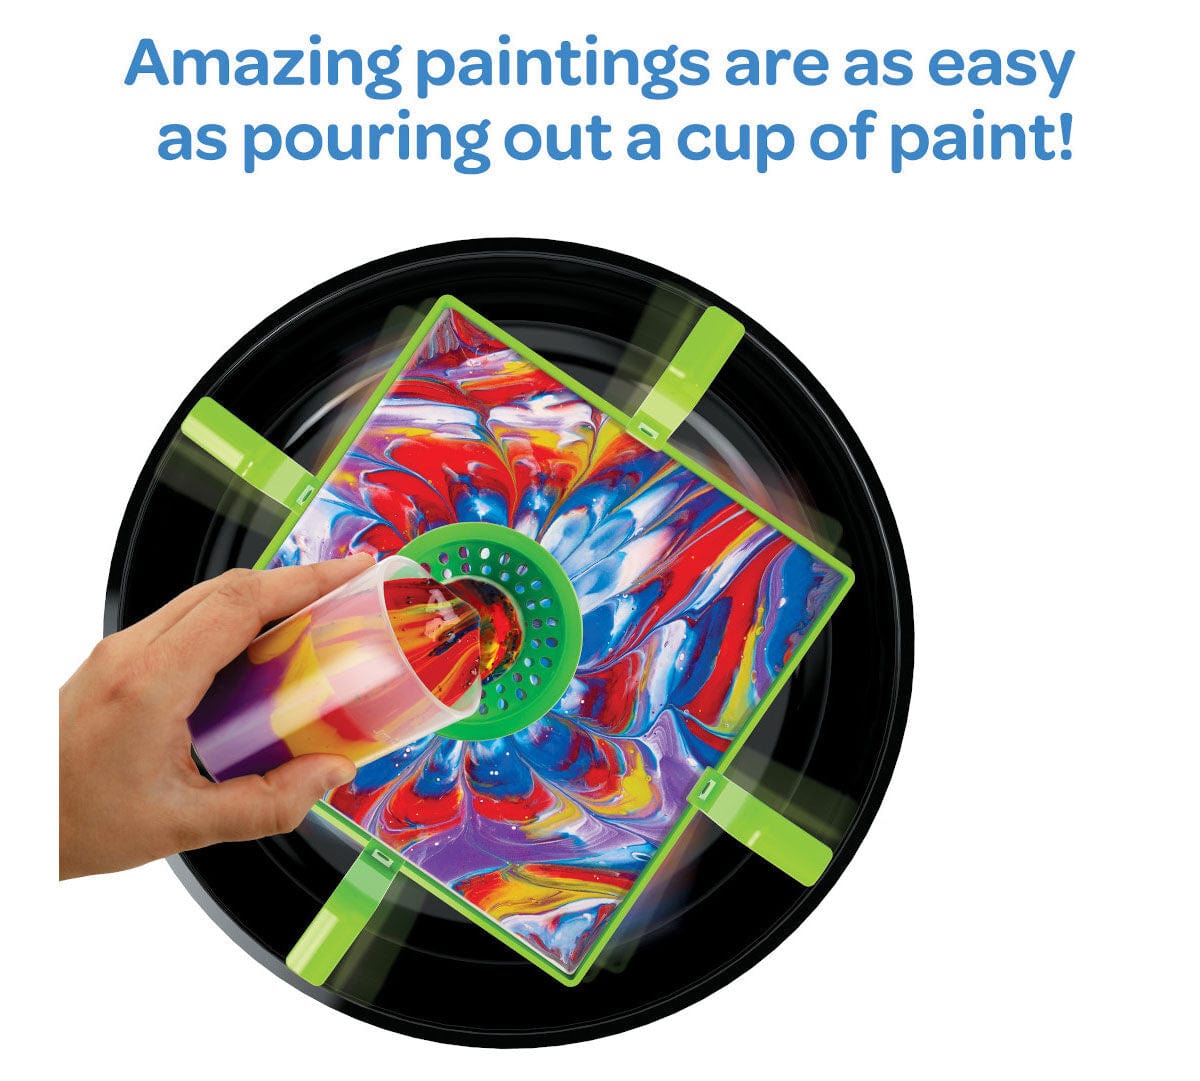 Washable Paint Pour Art Set | Crayola by Crayola, USA Art & Craft